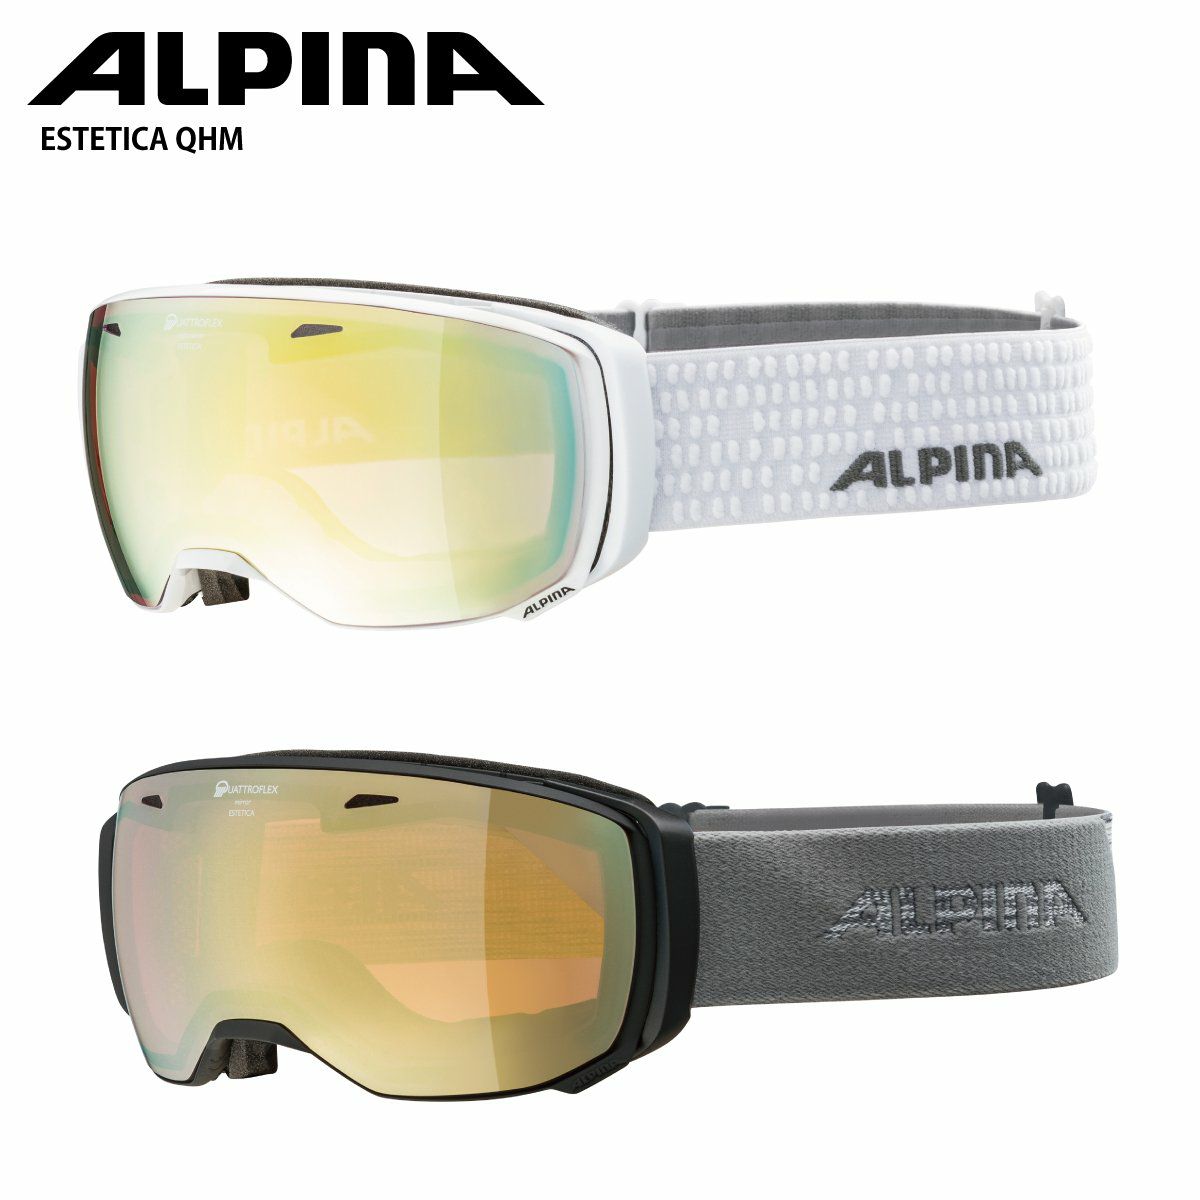 ALPINA(アルピナ) スキースノーボードゴーグル ユニセックス ハイコンミラーレンズ くもり止め メガネ使用可 NAKISKA Q LI - 通販  - portoex.com.br